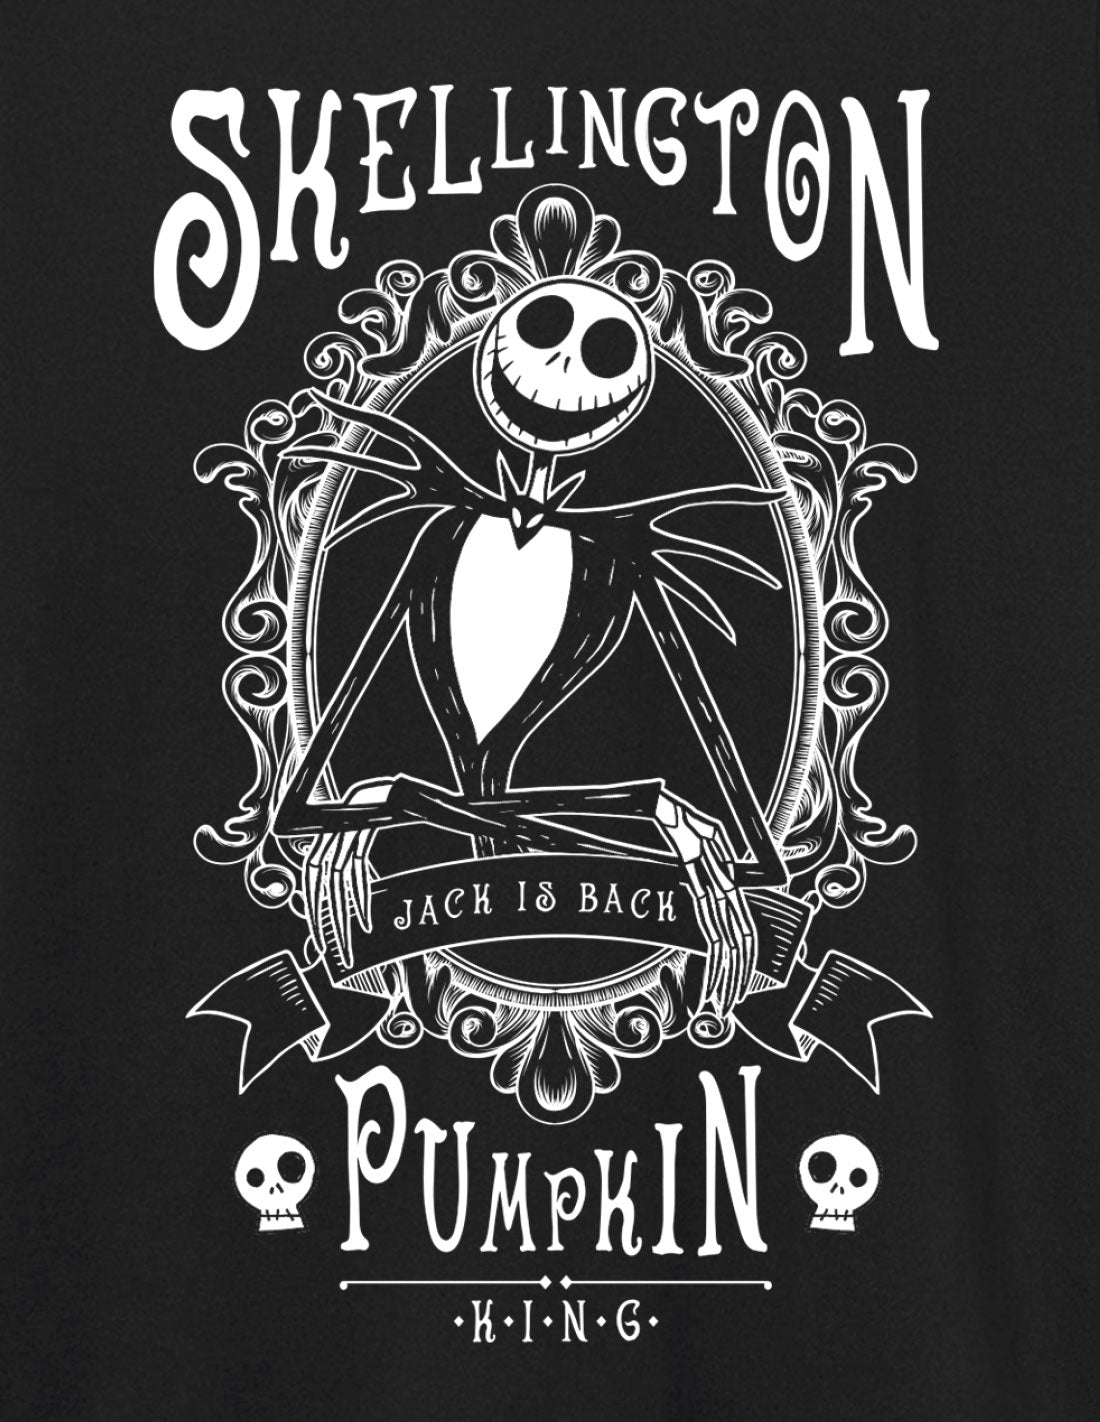 Disney t-shirt - Jack Pumpkin King